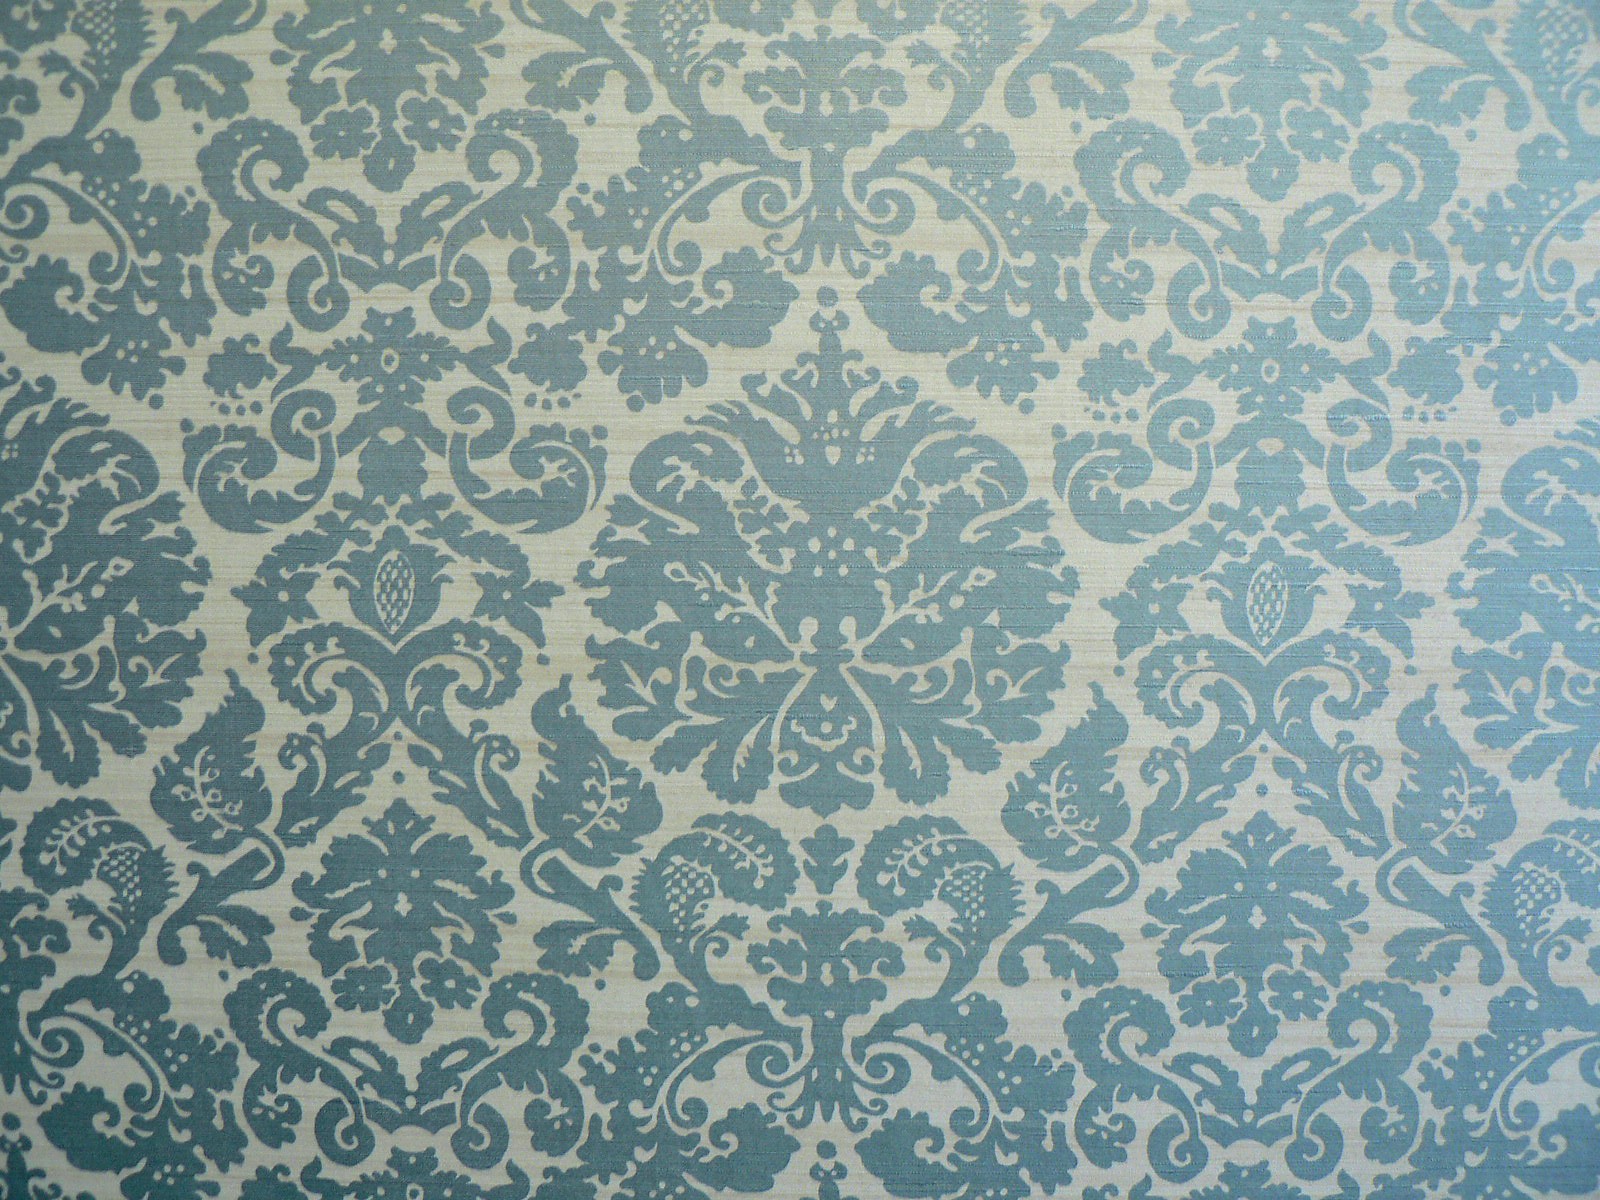 Pattern vintage patterns textures damask wallpaper 1600x1200 66631